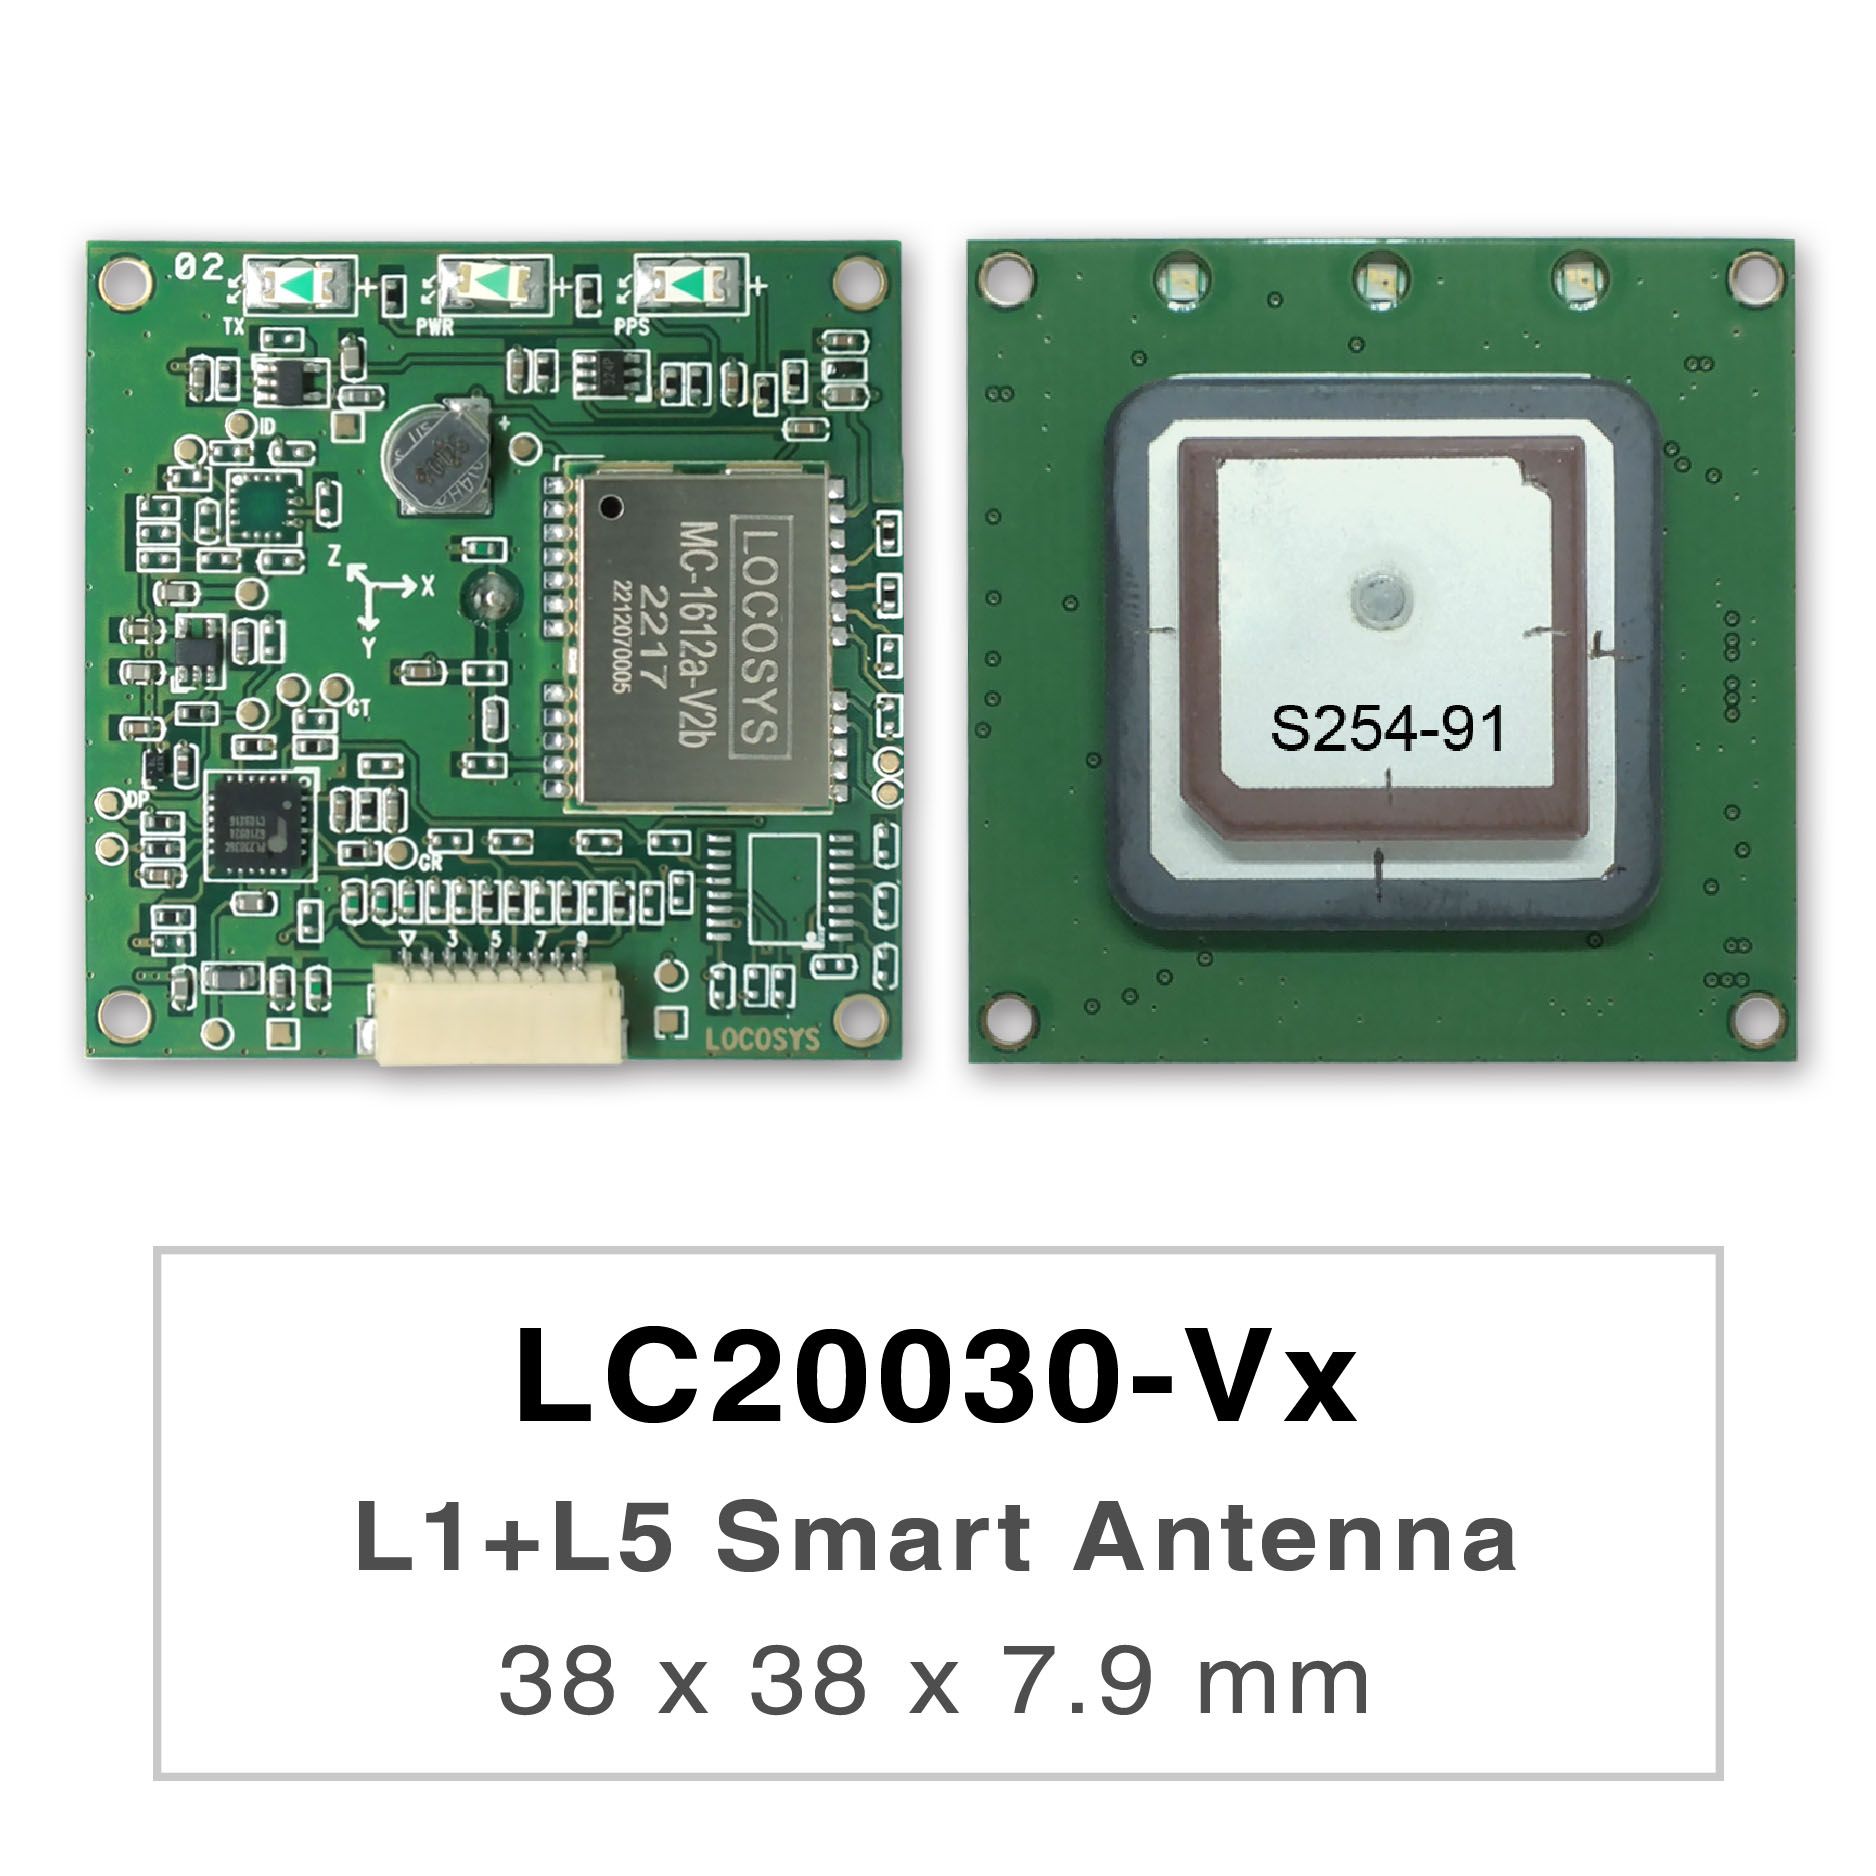 LC2003x-Vx シリーズ製品は、高性能デュアルバンド GNSS スマート アンテナ モジュールであり、組み込みアンテナと GNSS 受信機回路を含み、幅広い OEM システム アプリケーション向けに設計されています。